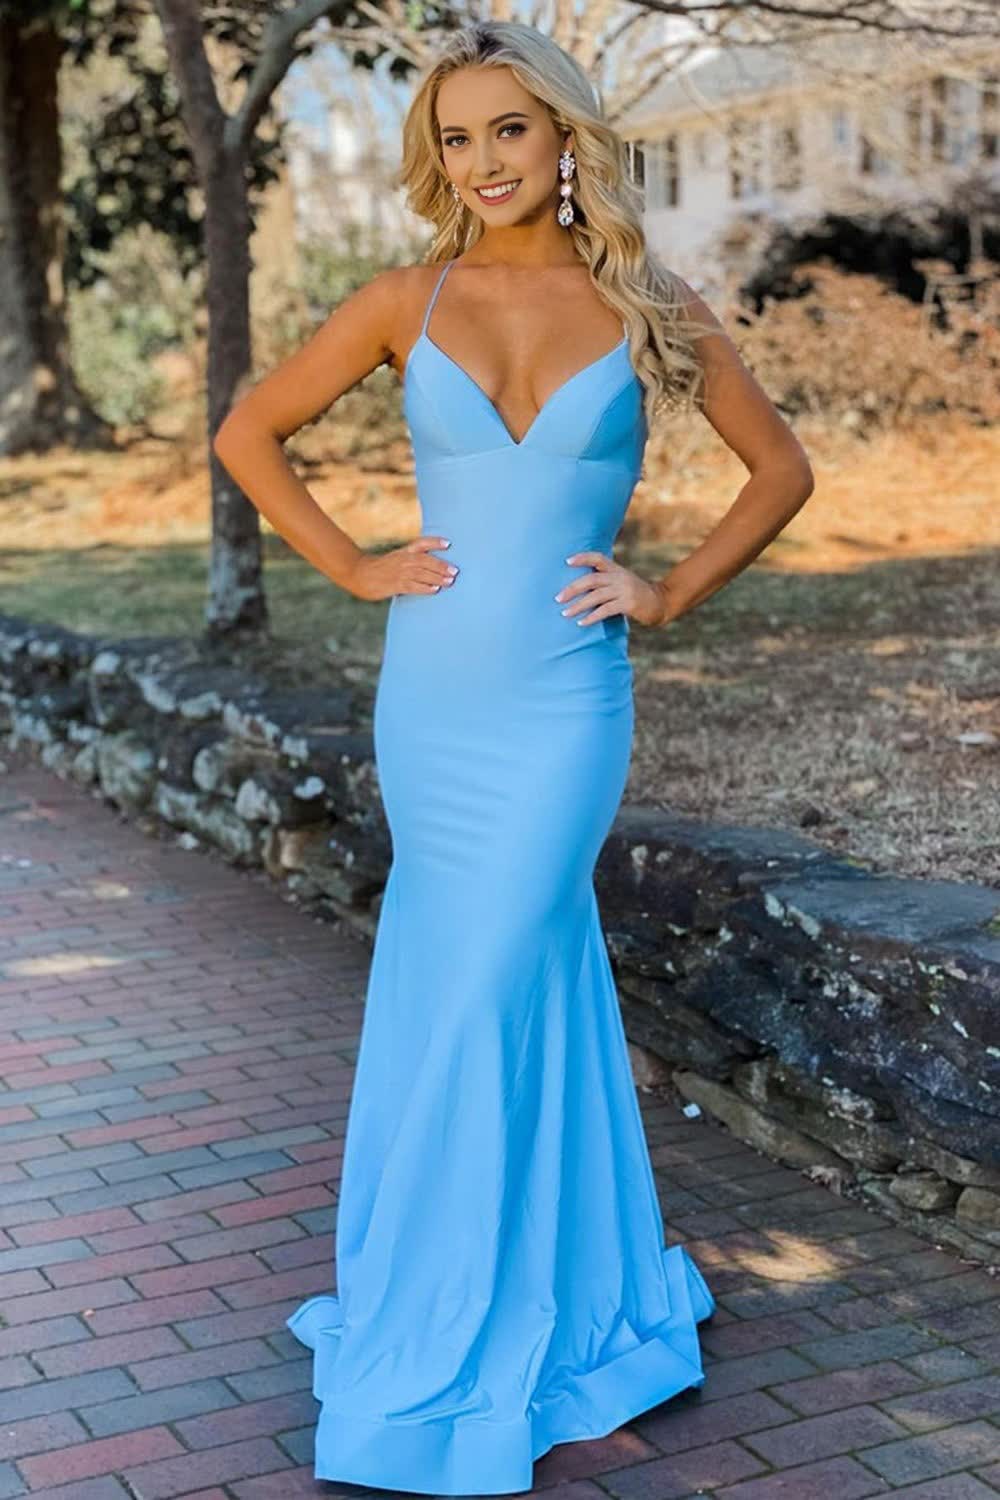 Blue Spaghetti Straps Mermaid Corset Prom Dress outfits, Blue Spaghetti Straps Mermaid Prom Dress